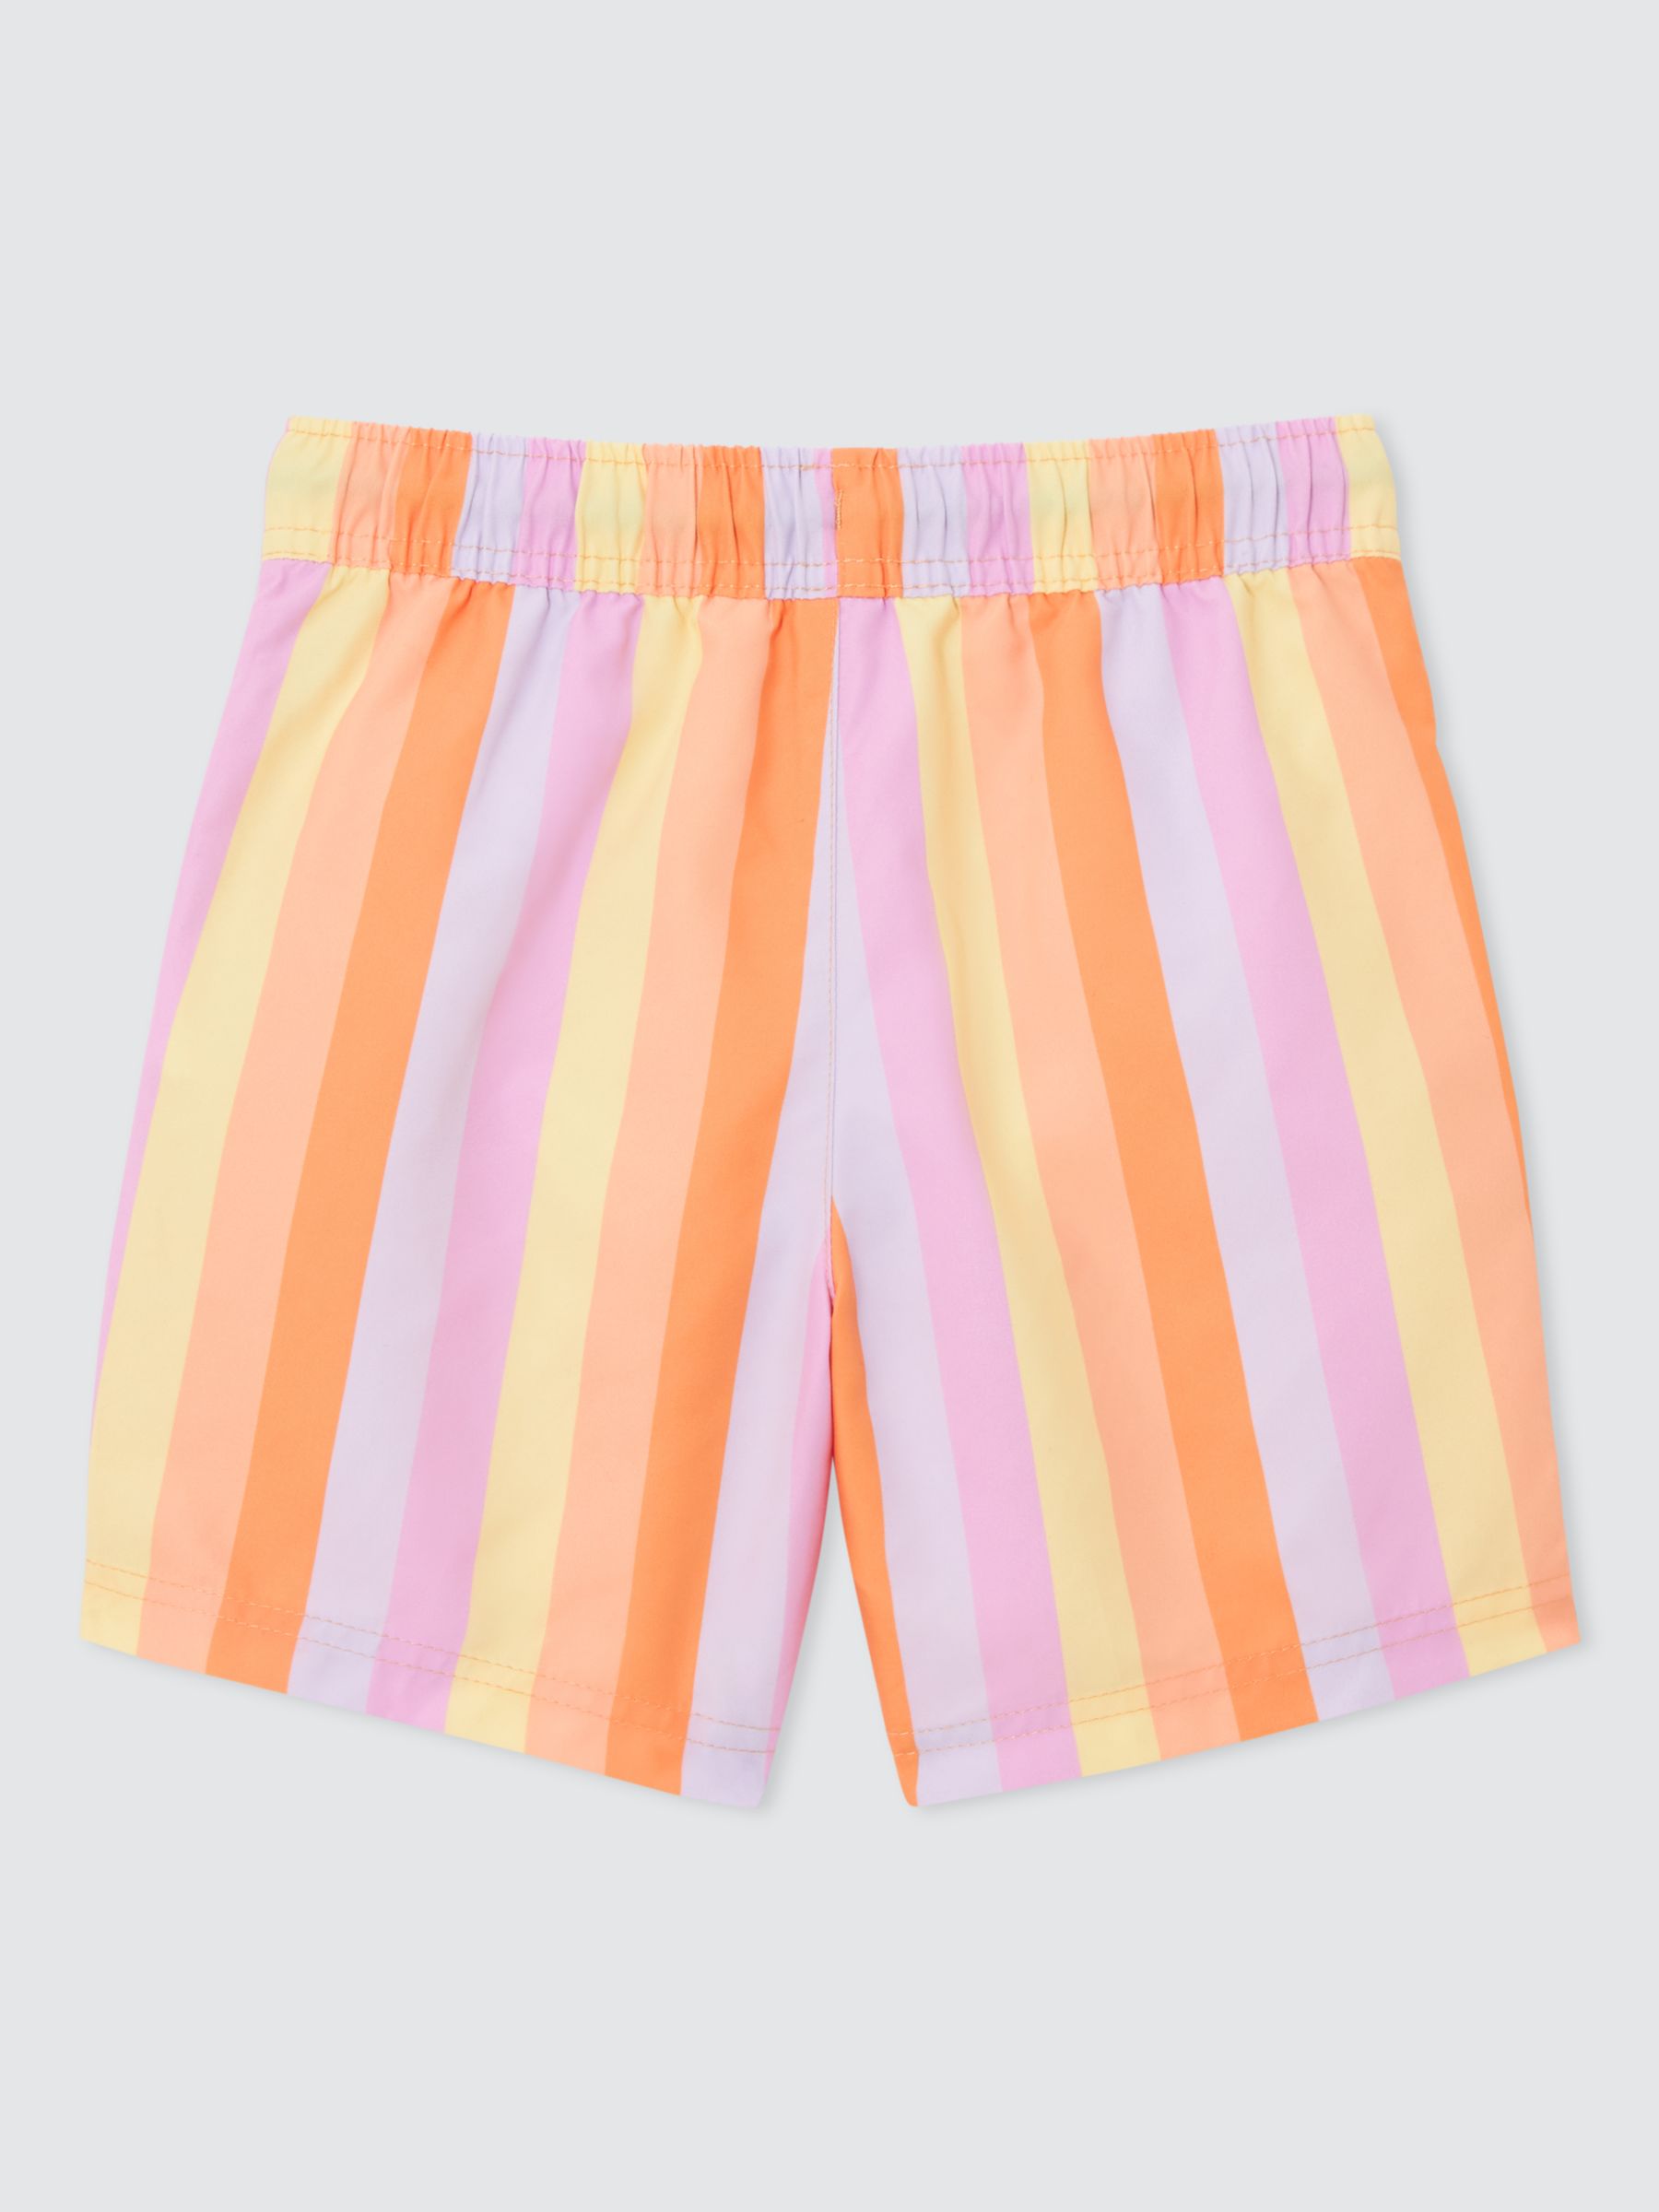 Buy John Lewis ANYDAY Kids' Vertical Stripe Sunny Days Swim Shorts, Multi Online at johnlewis.com